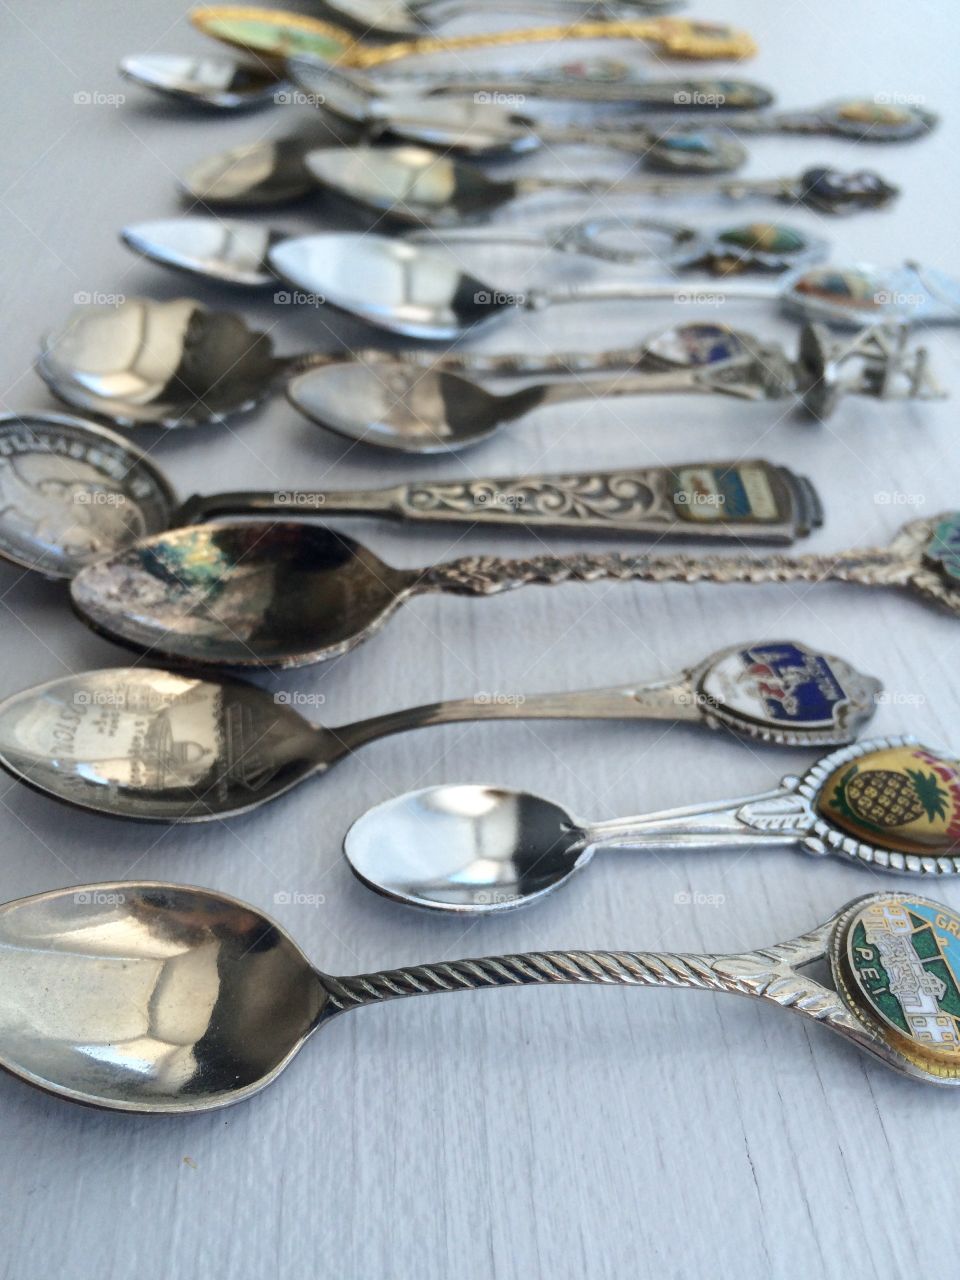 Grandma’s spoon collection